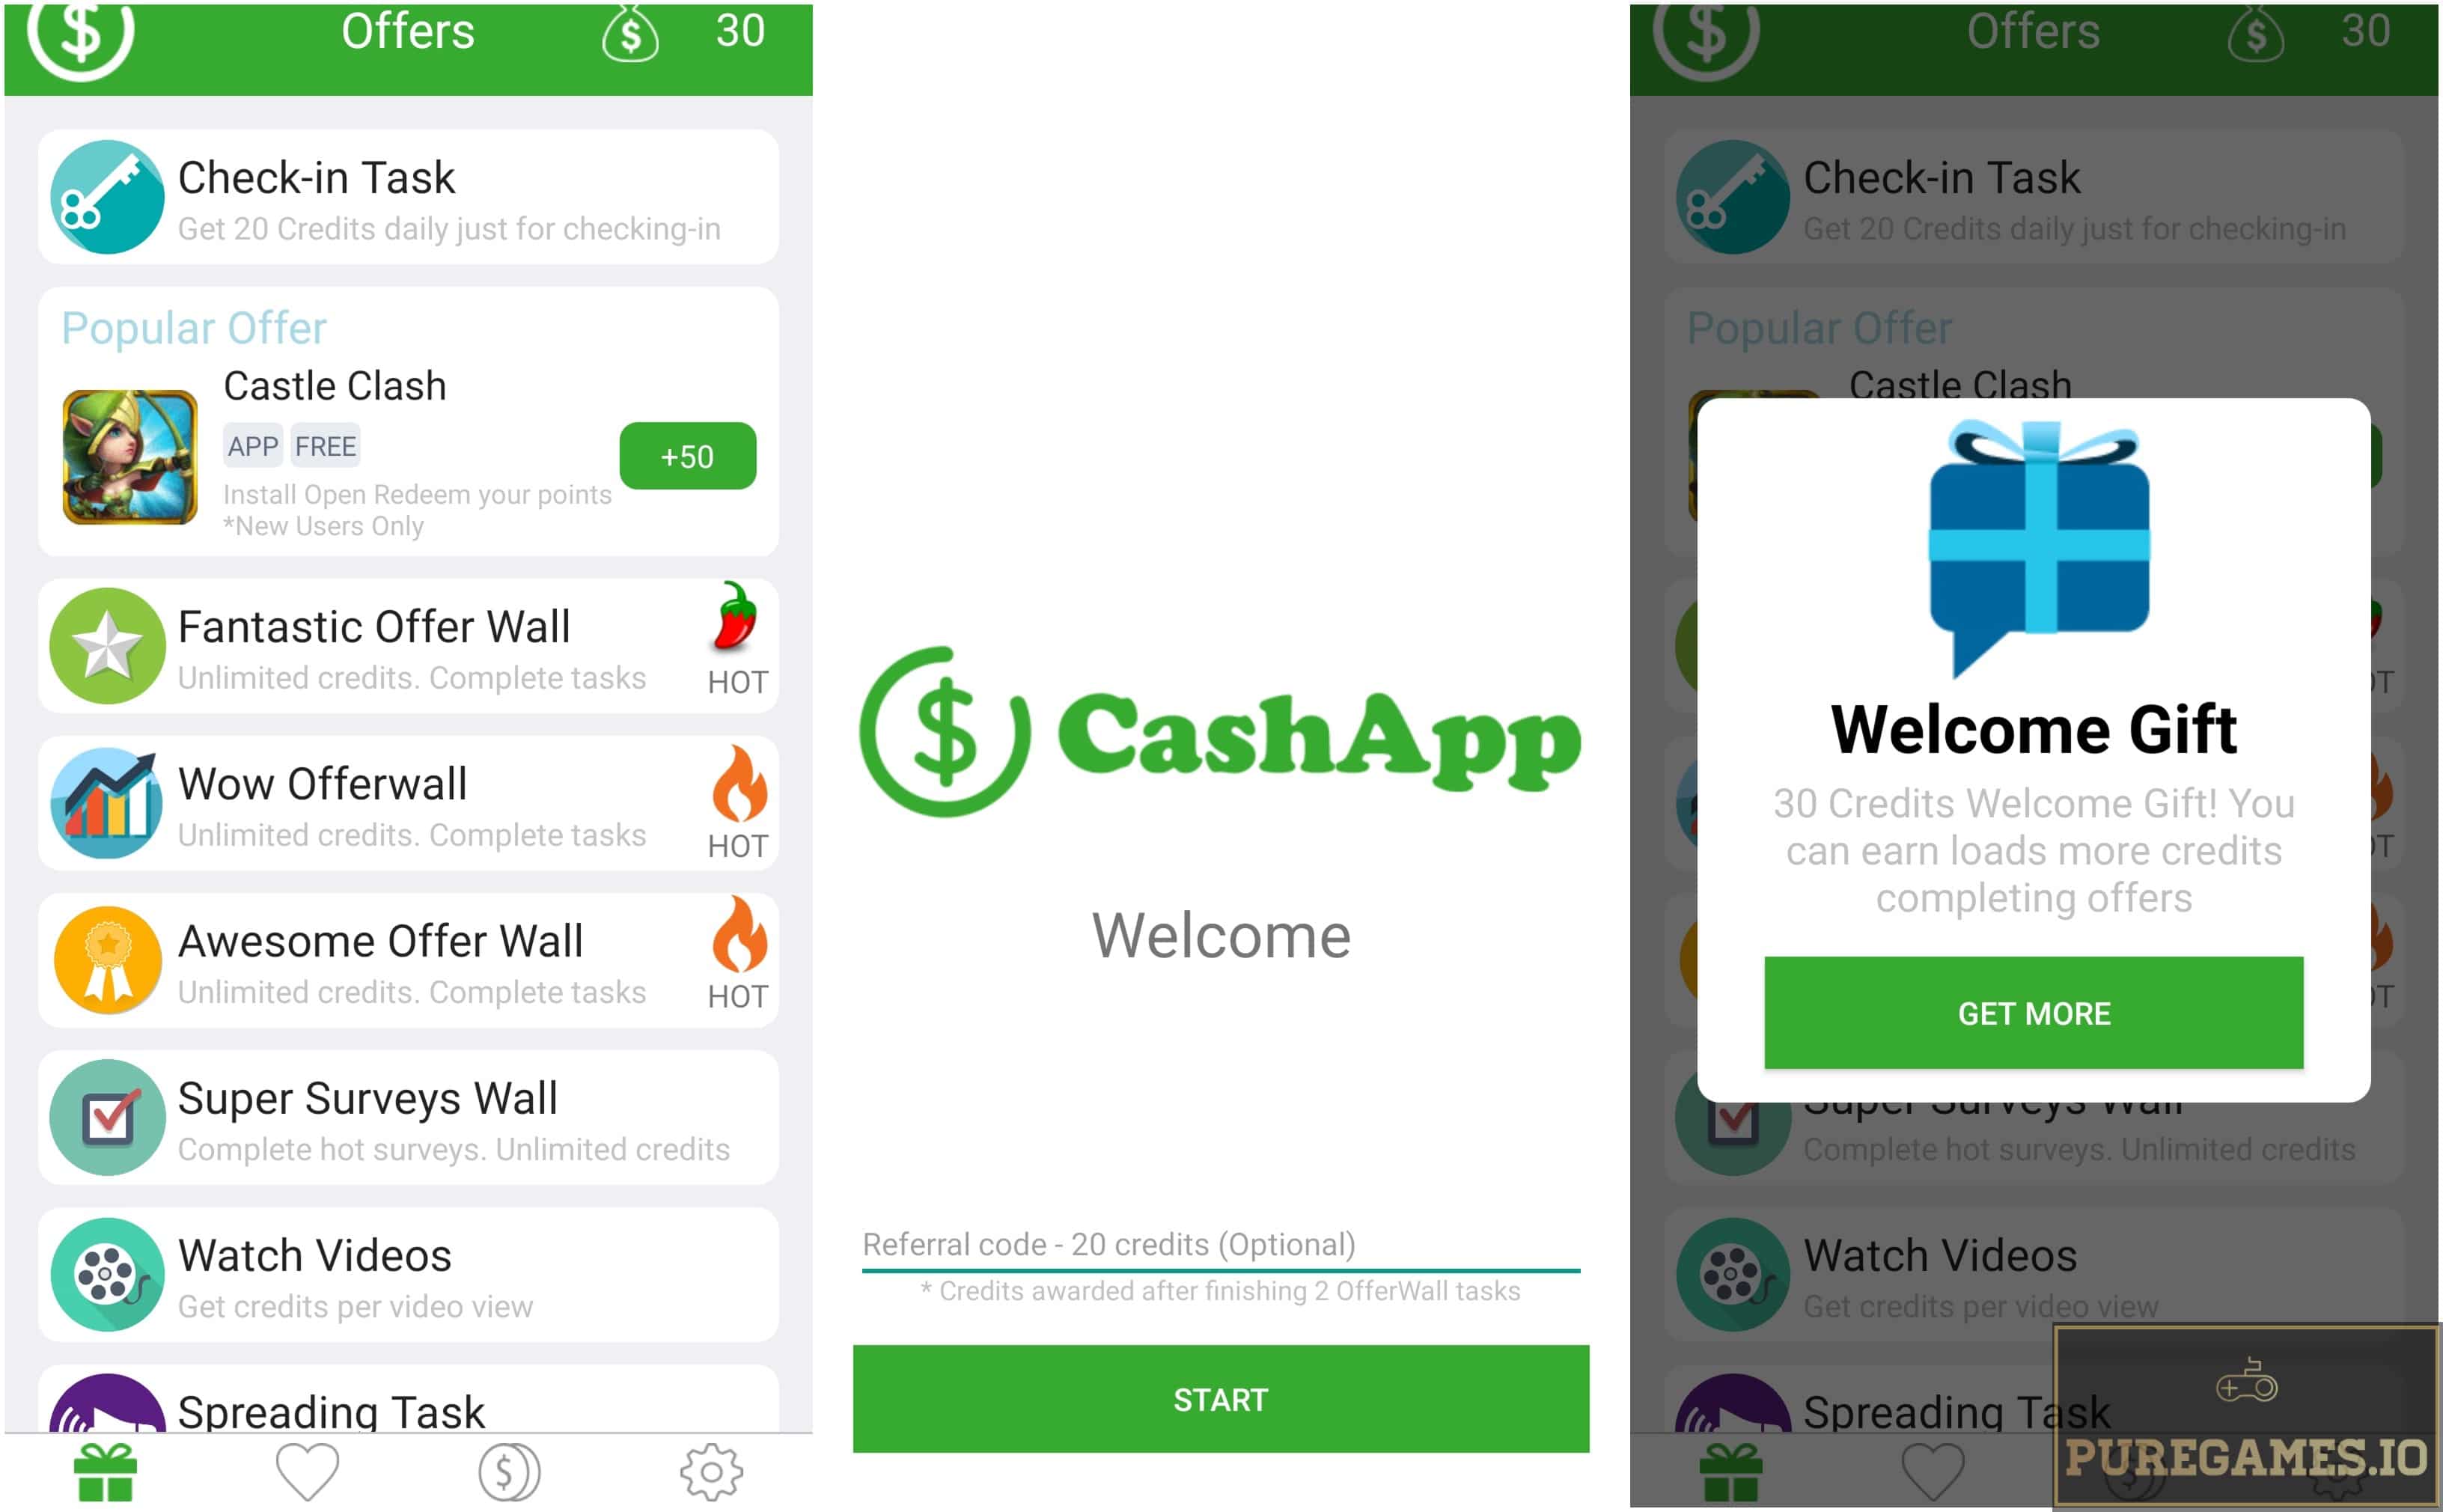 Download CashApp - For Android/iOS - PureGames